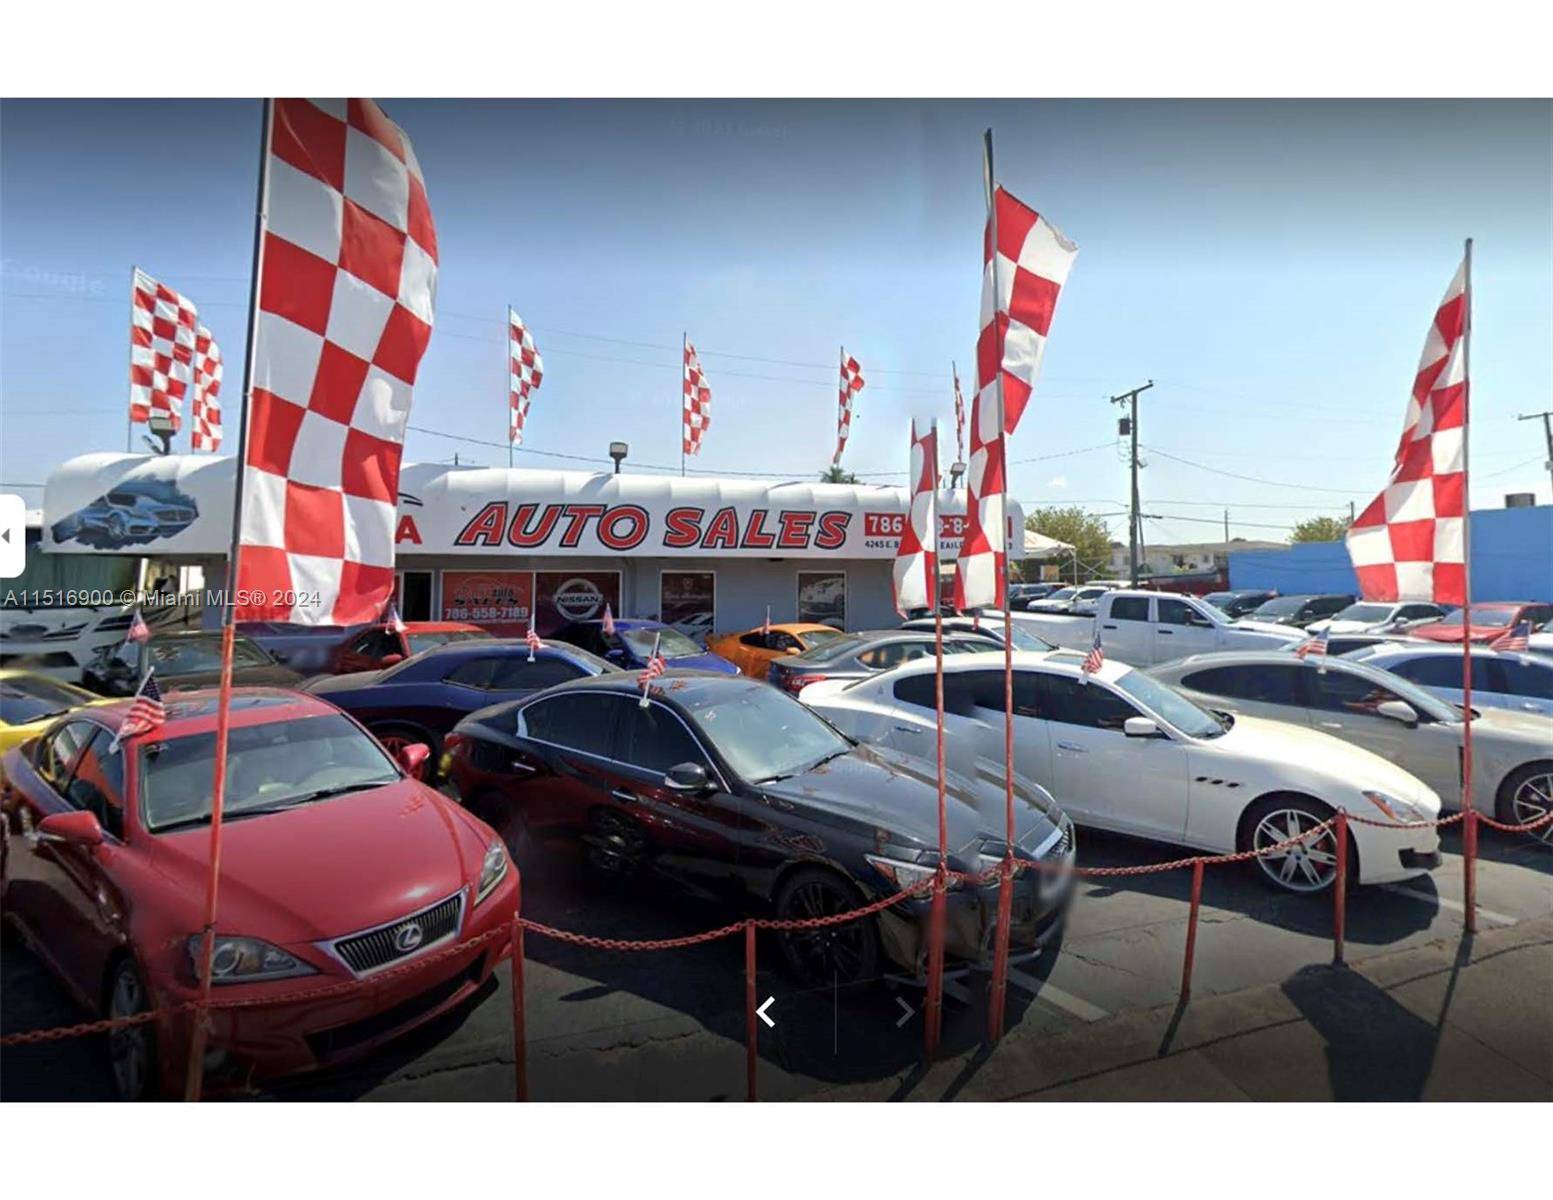 Auto dealership for sale, well established business.